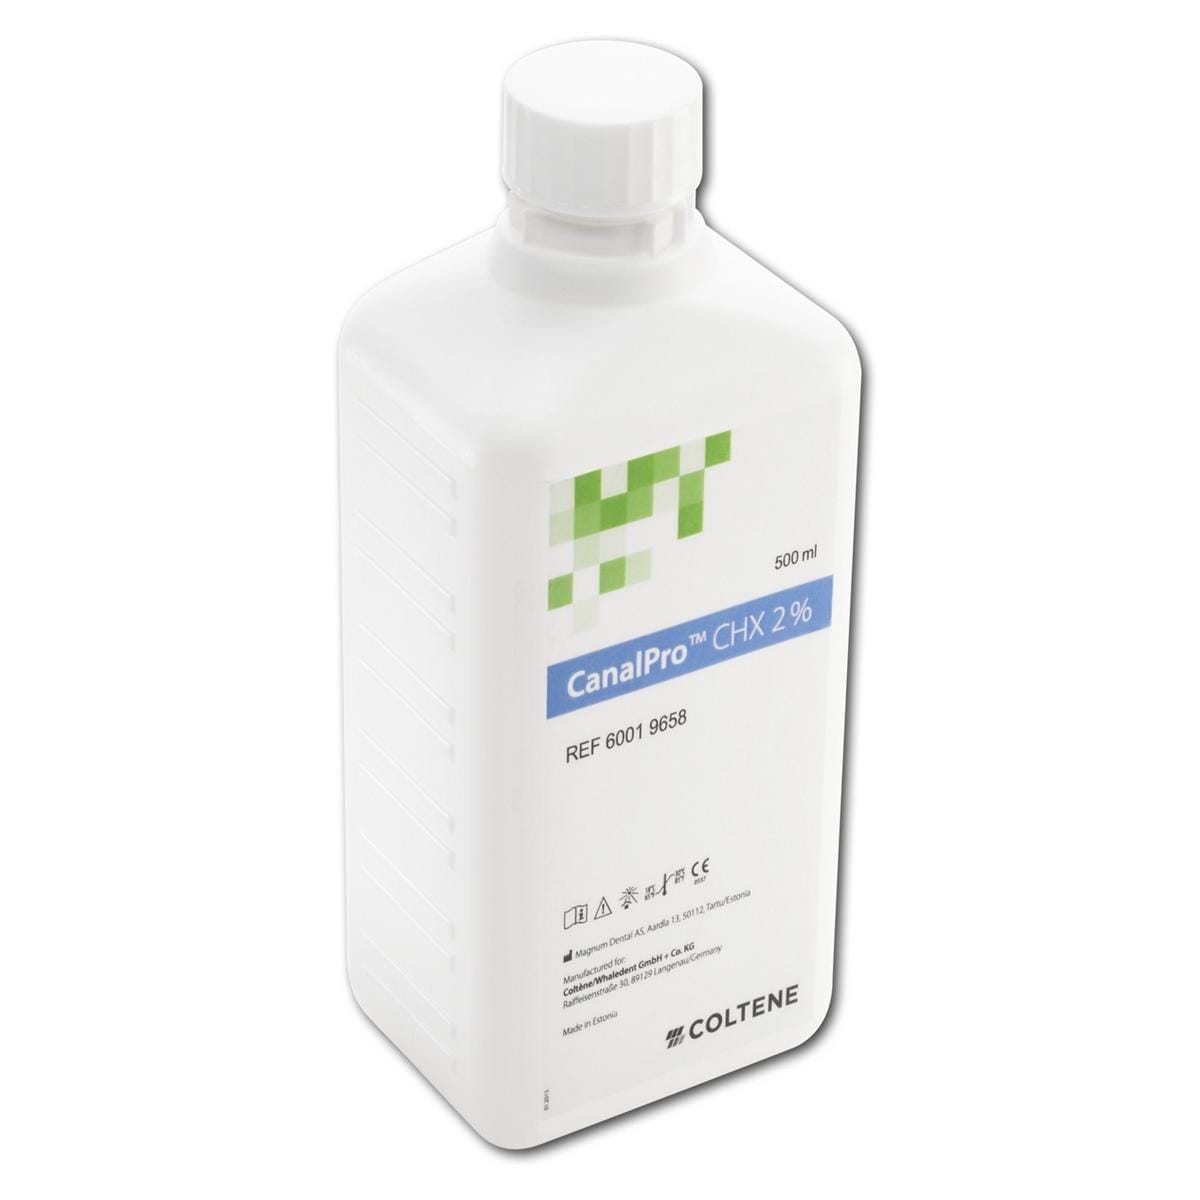 CanalPro irrigatievloeistof CHX 2% (chloorhexidine) - Fles, 500 ml